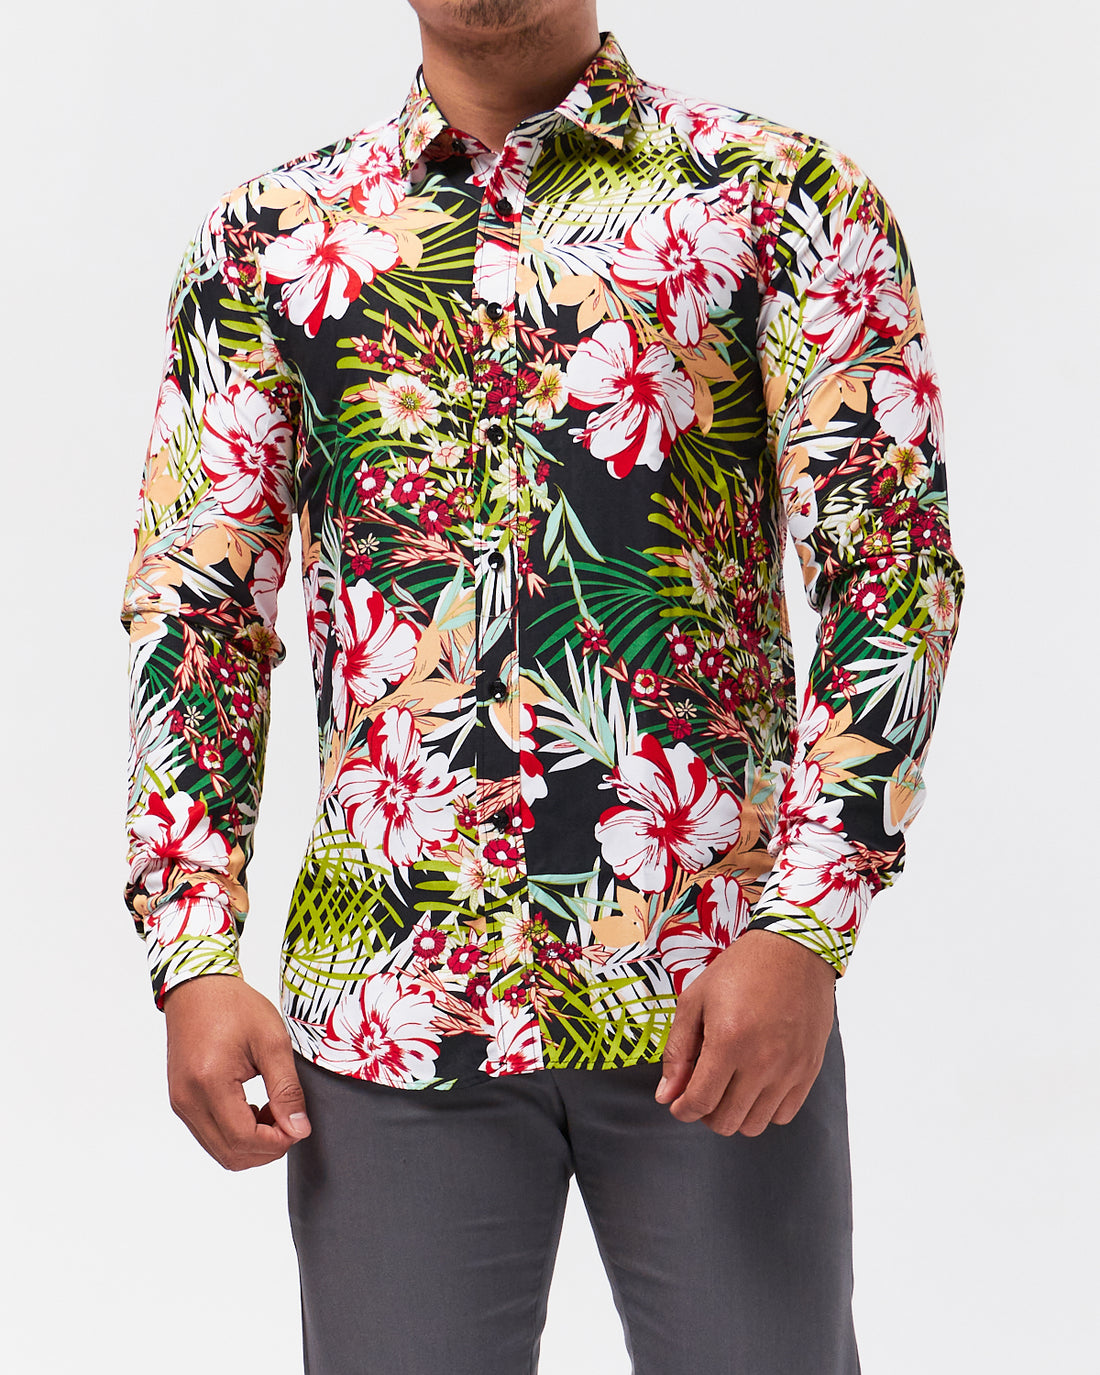 Floral Printed Men Shirt Long Sleeve 21.90